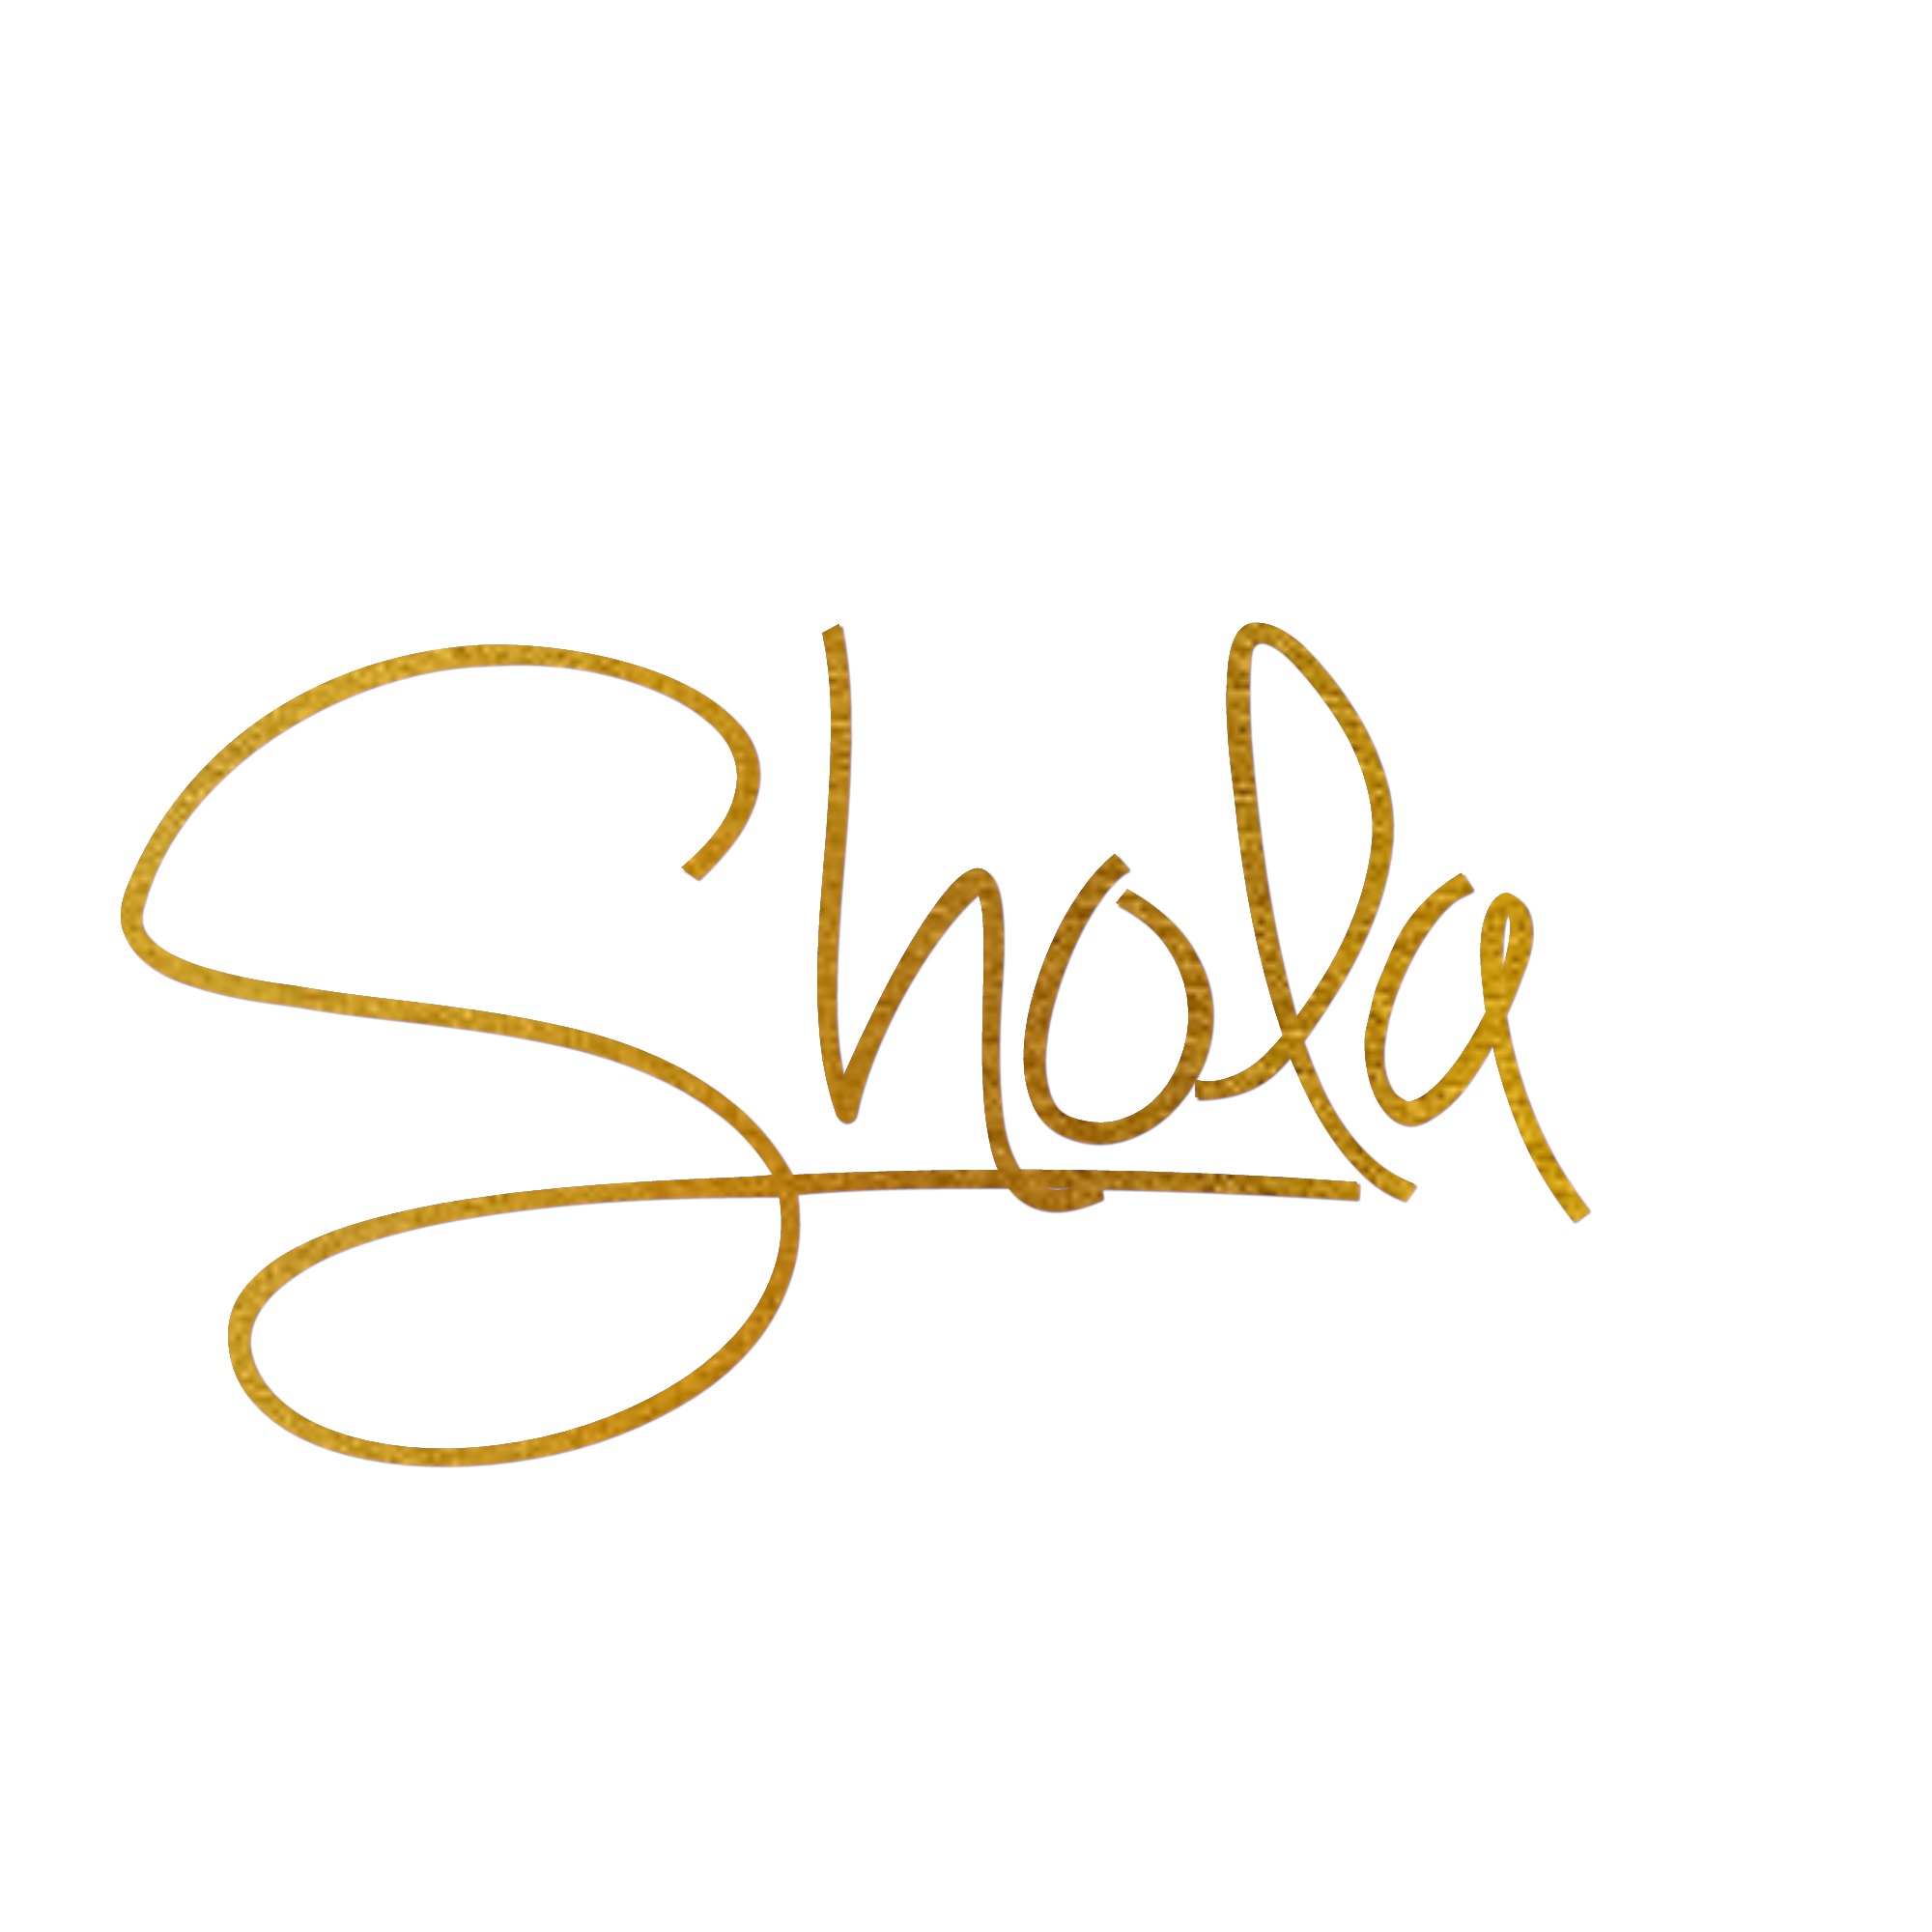 shola-gold